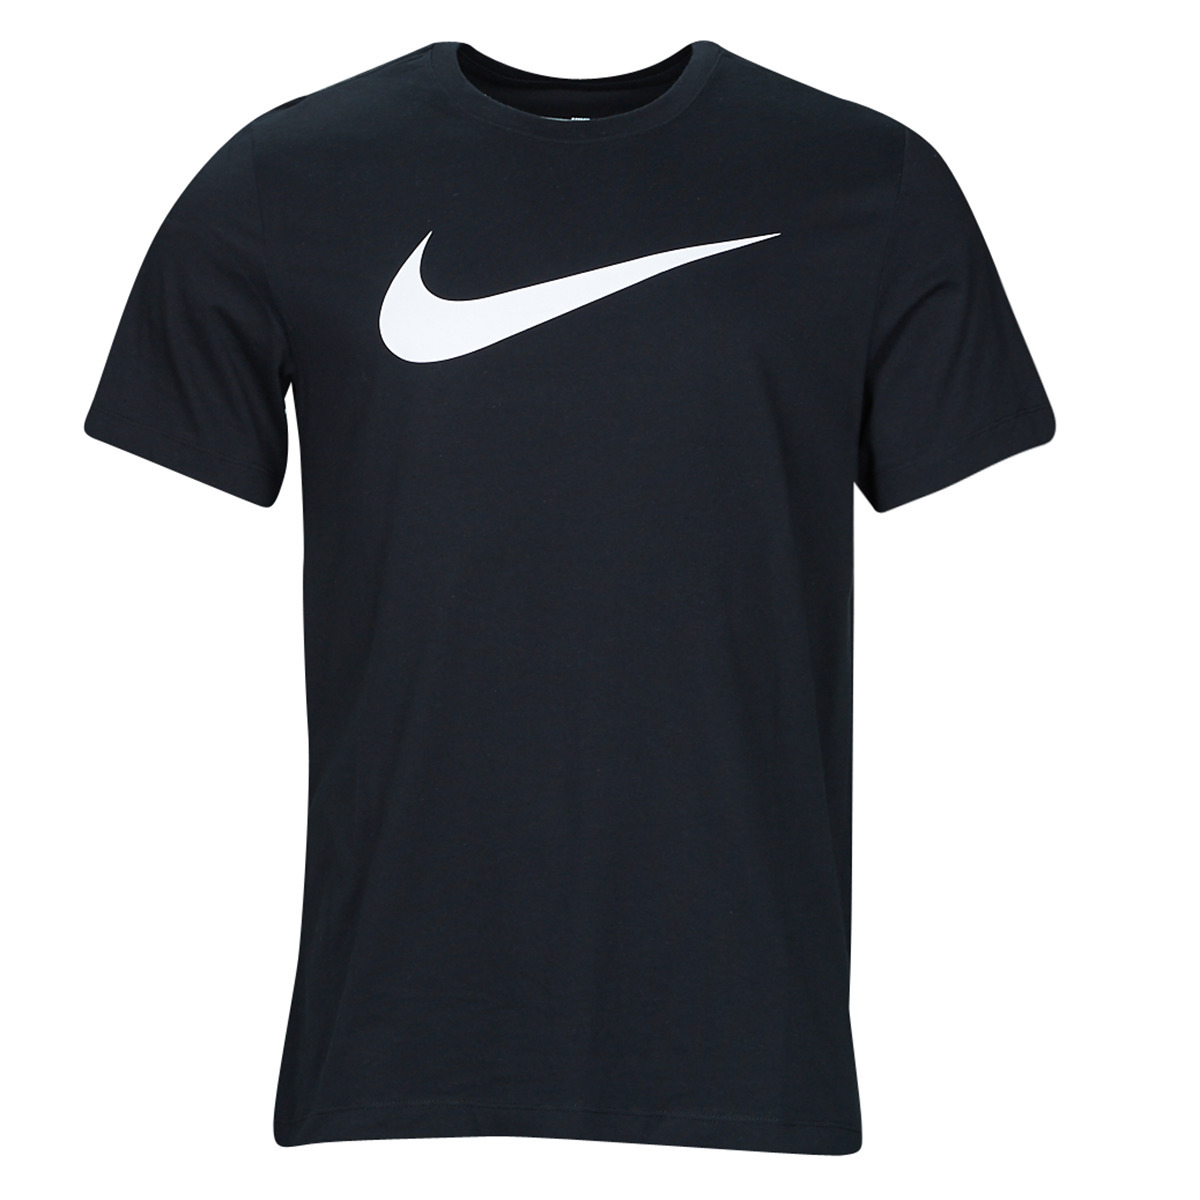 Men's T-Shirt Black Nike Spartoo GOOFASH